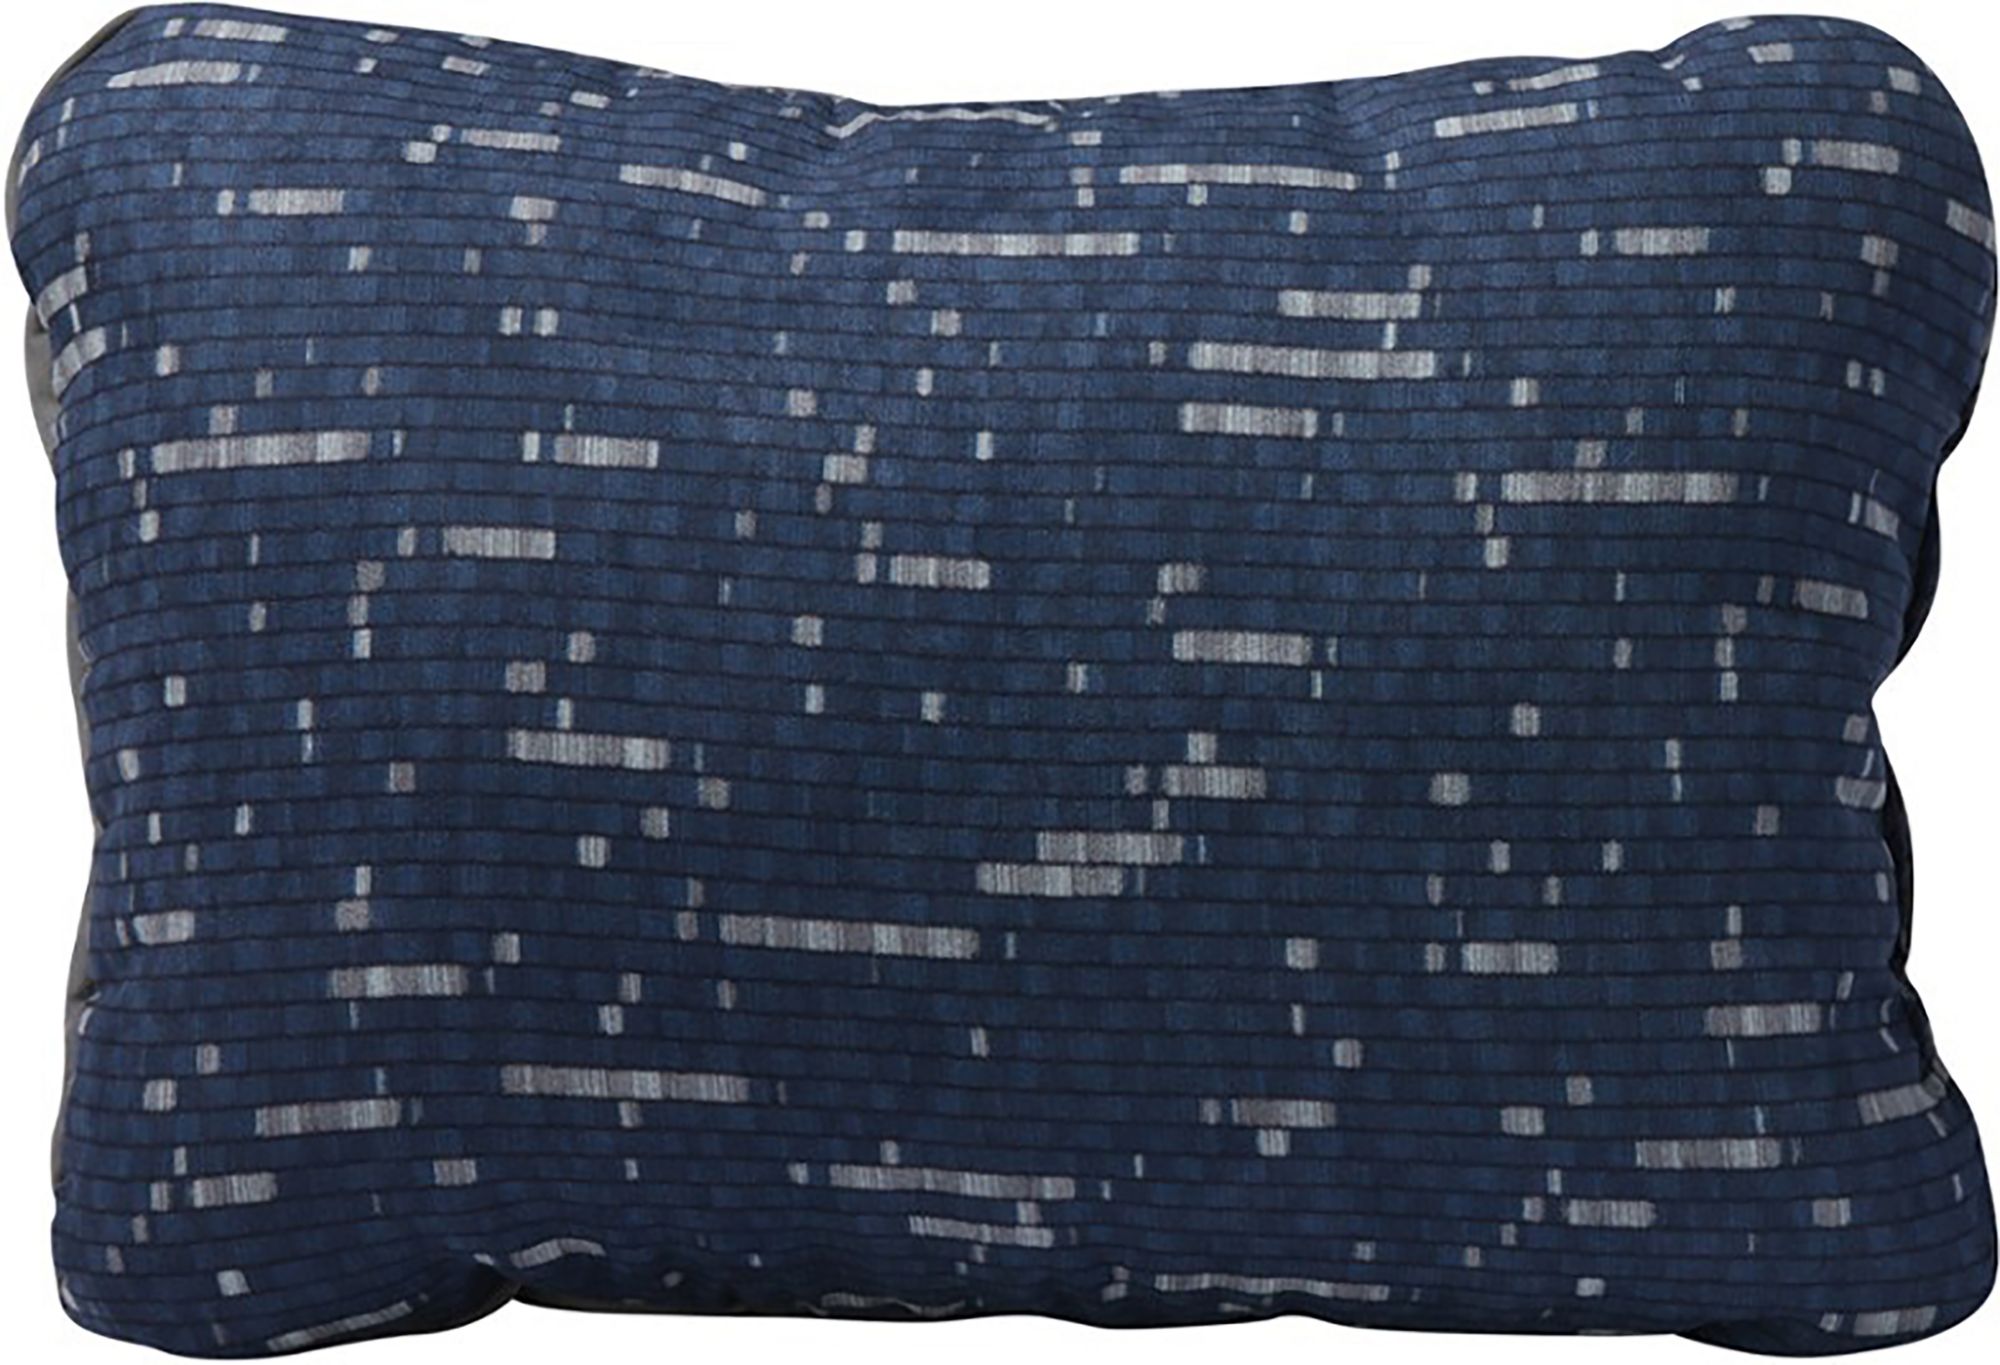 Photos - Bed Linen Therm-a-Rest Compressible Pillow Cinch, Warp Speed 22TARUCMPRSSBLPLLCSLA 